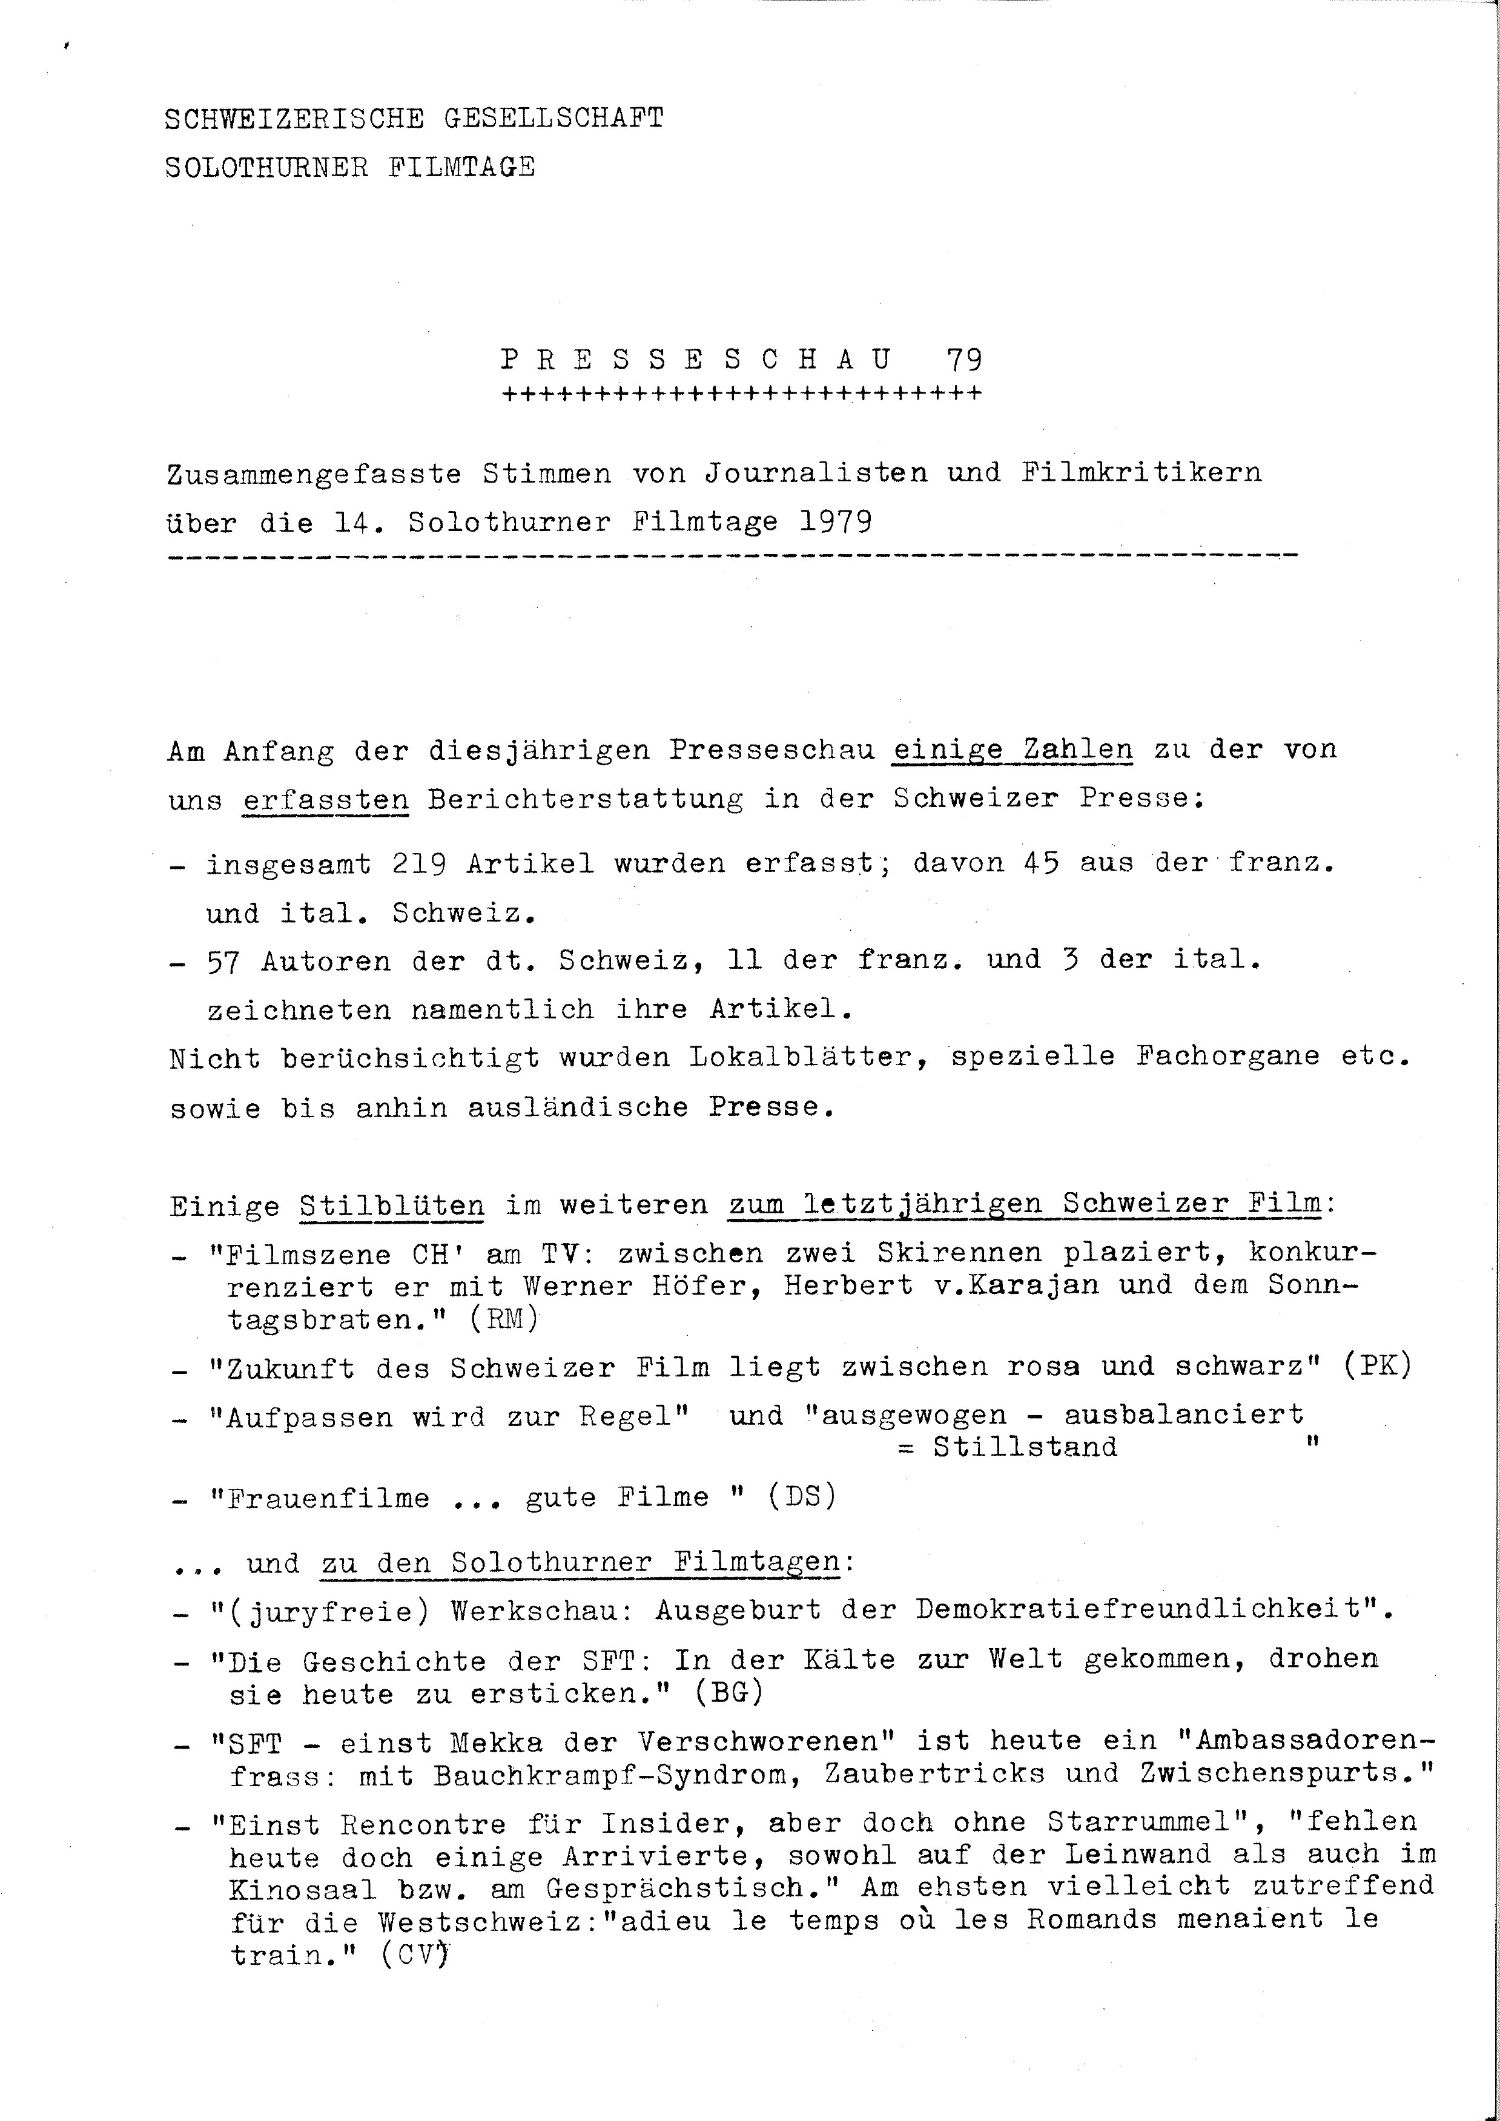 Presseschau, 14. Solothurner Filmtage, 1979